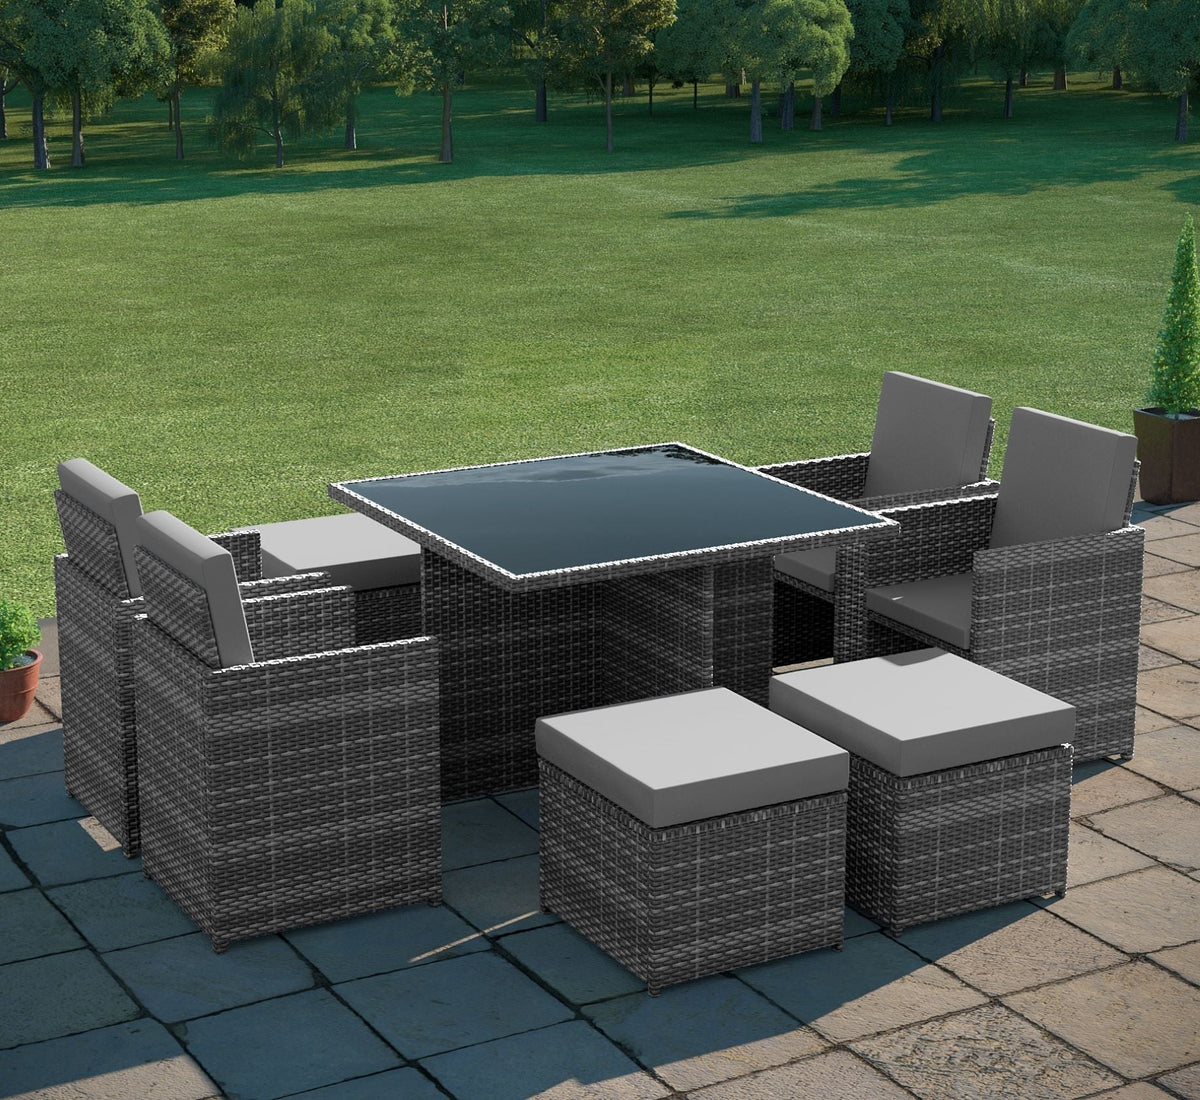 Cube Rattan Dining Garden Furniture Set | 8-Seater - Mixed Grey / Light Rattan Furniture MaxiFurn 